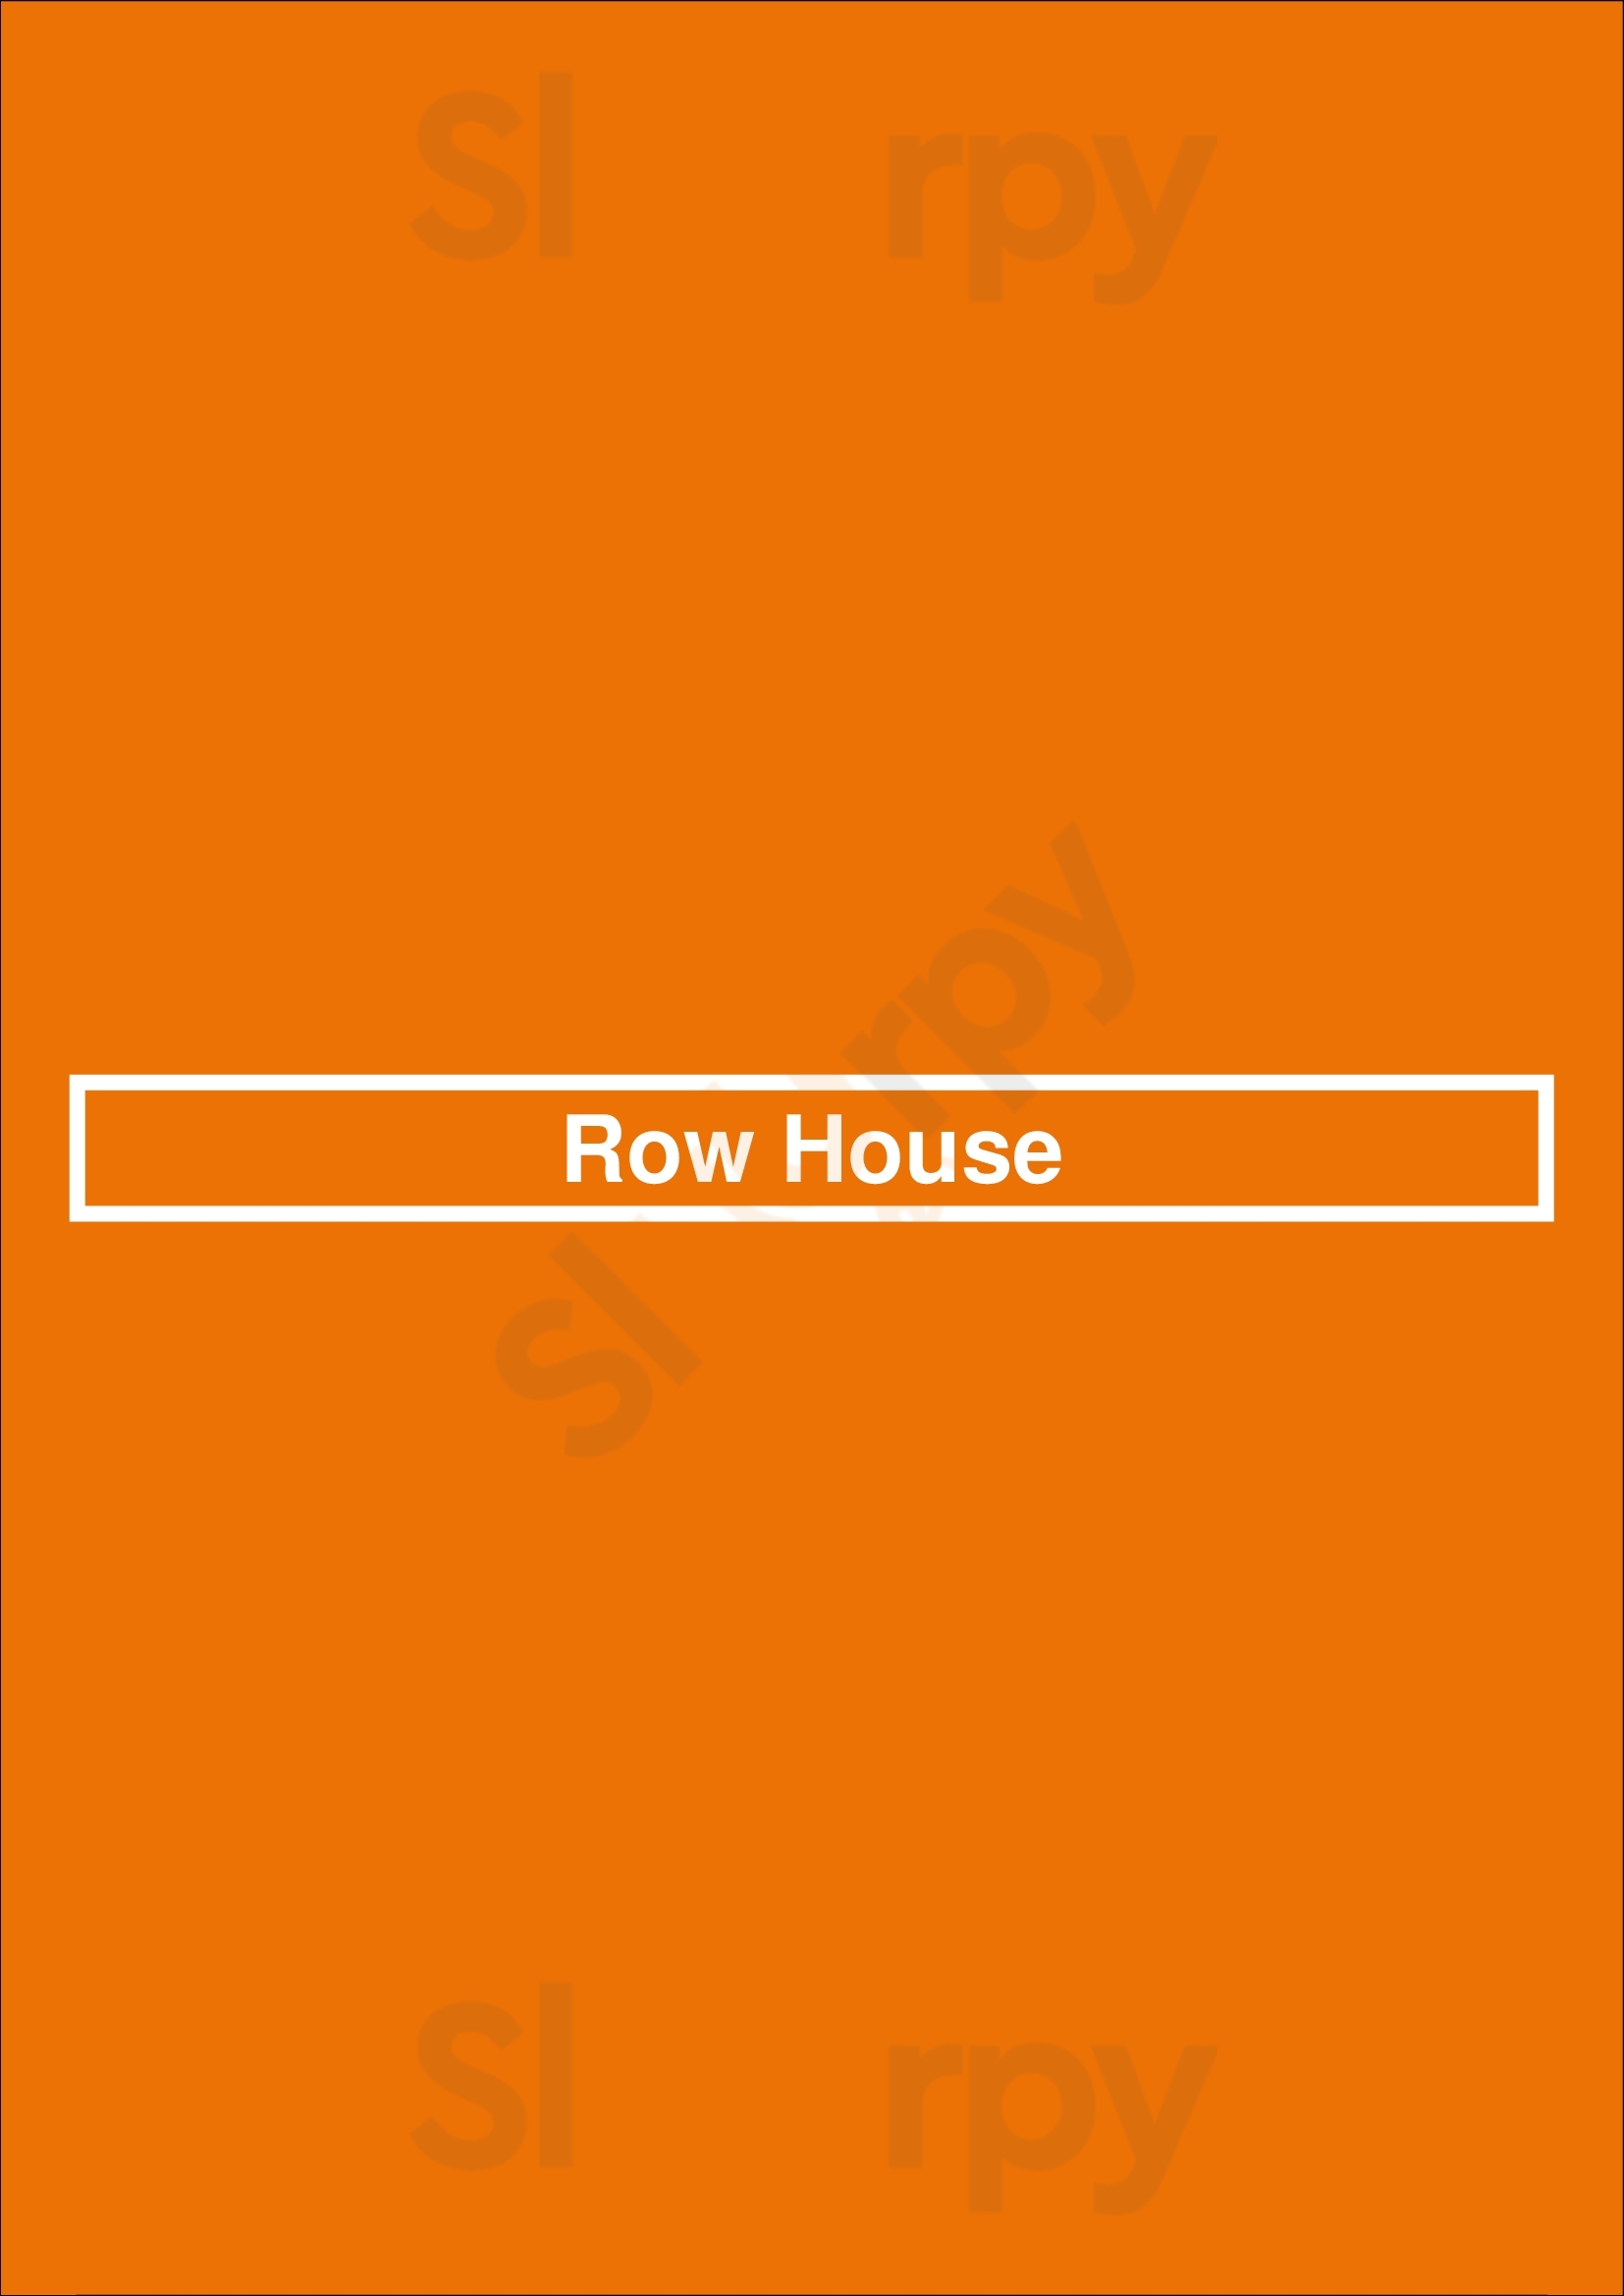 Row House New York City Menu - 1